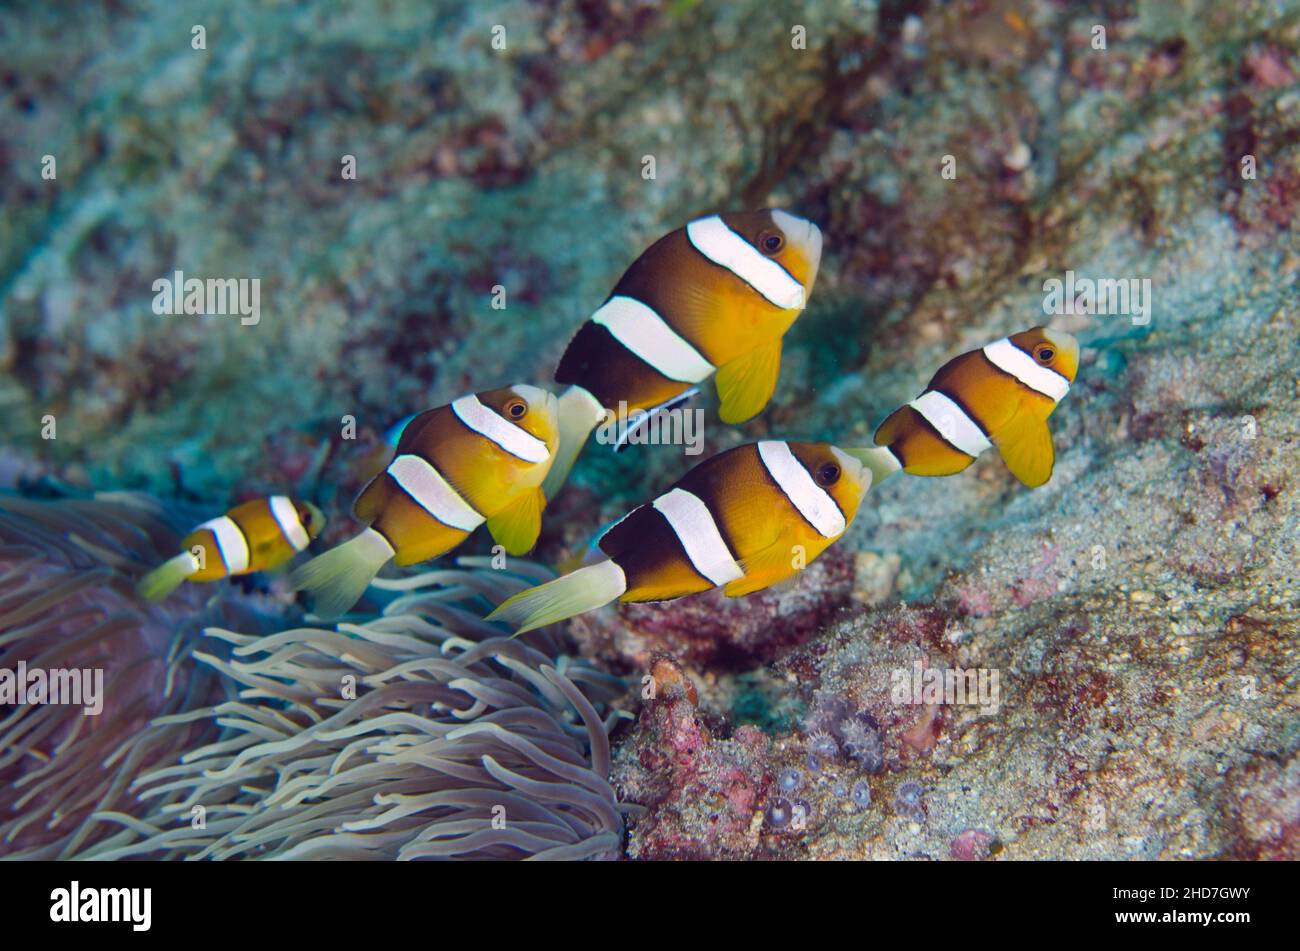 School of Clark's Anemonefish (Amphiprion clarkii) by Sea Anemone (Heteractis sp), Turtleneck dive site, Padang Bai, Bali, Indonesia. Stock Photo